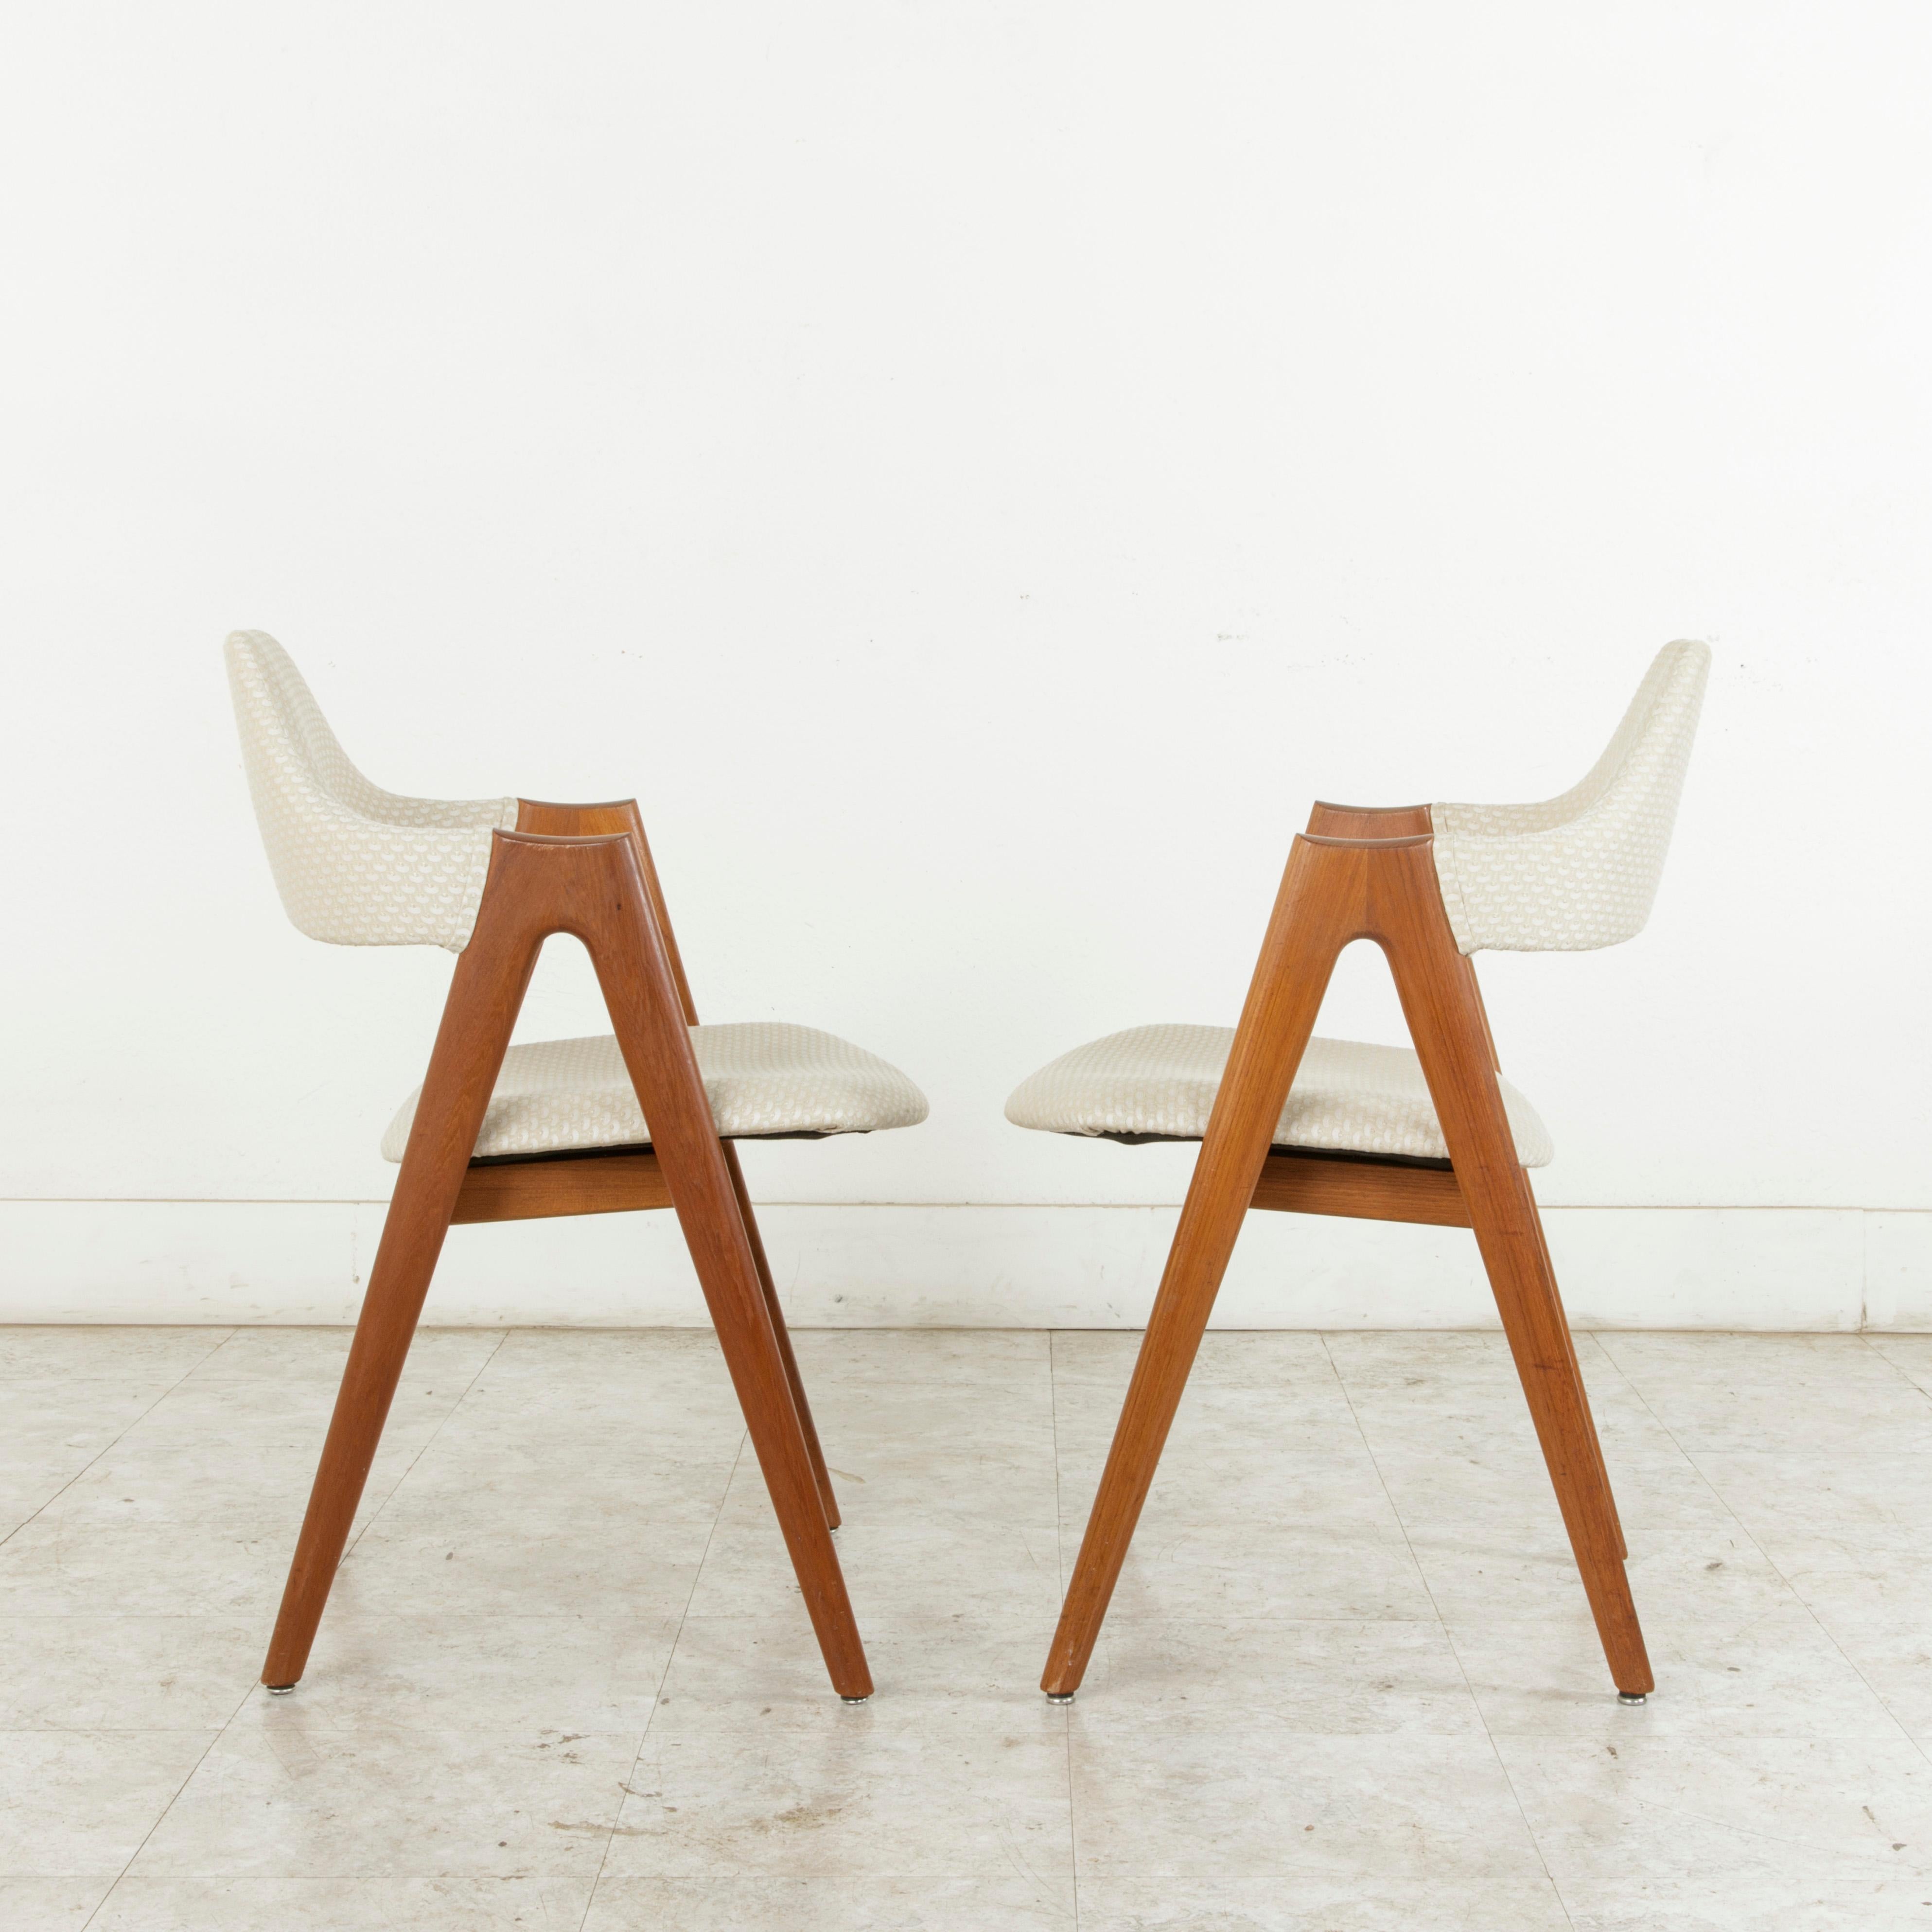 20th Century Pair of Midcentury Danish Teak Compass Chairs Designed by Kai Kristiansen